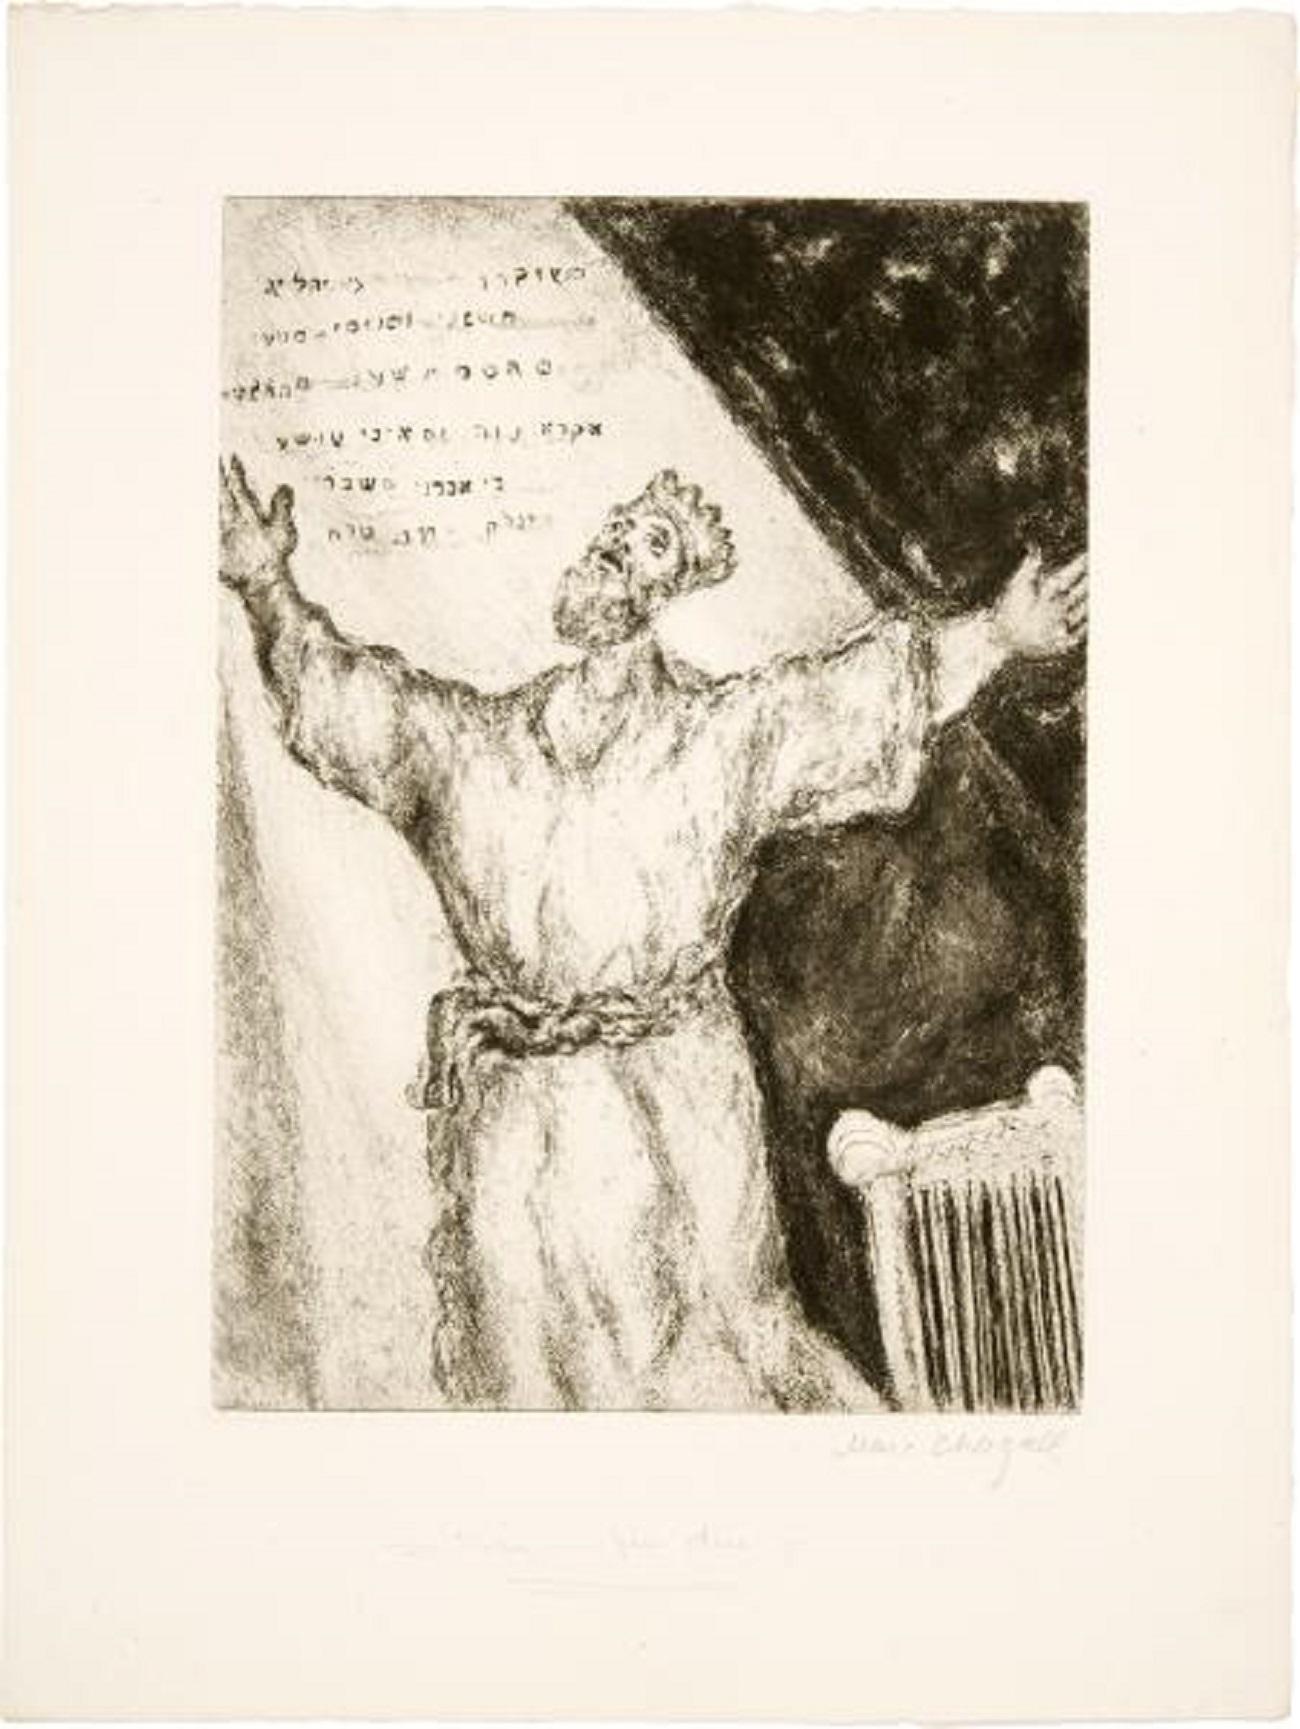 MARC CHAGALL (1887-1985)
1 Illustrationen aus “La Bible”, Probedrucke

“Cantique de David Sorlier 272”

1 Sheet of etching, 1931-1939, 
Each c. 44-44, 5xc. 30, 5-33, 5 cm

Signature:1 sheet signed by the artist  in pencil “Marc Chagall”, Sheet 74